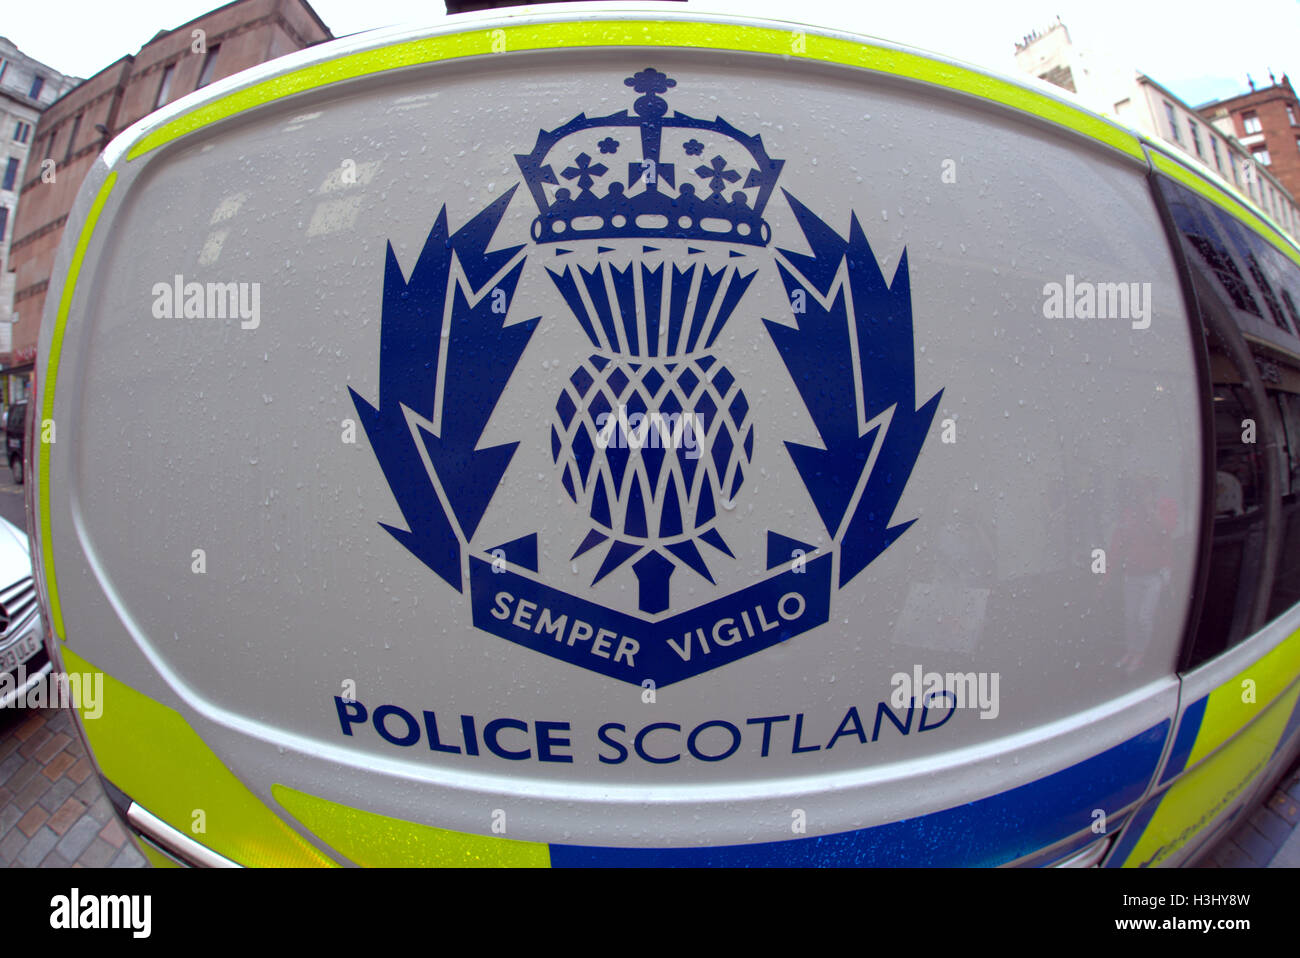 big brother eye police Scotland logos logo on vehicle sides Stock Photo